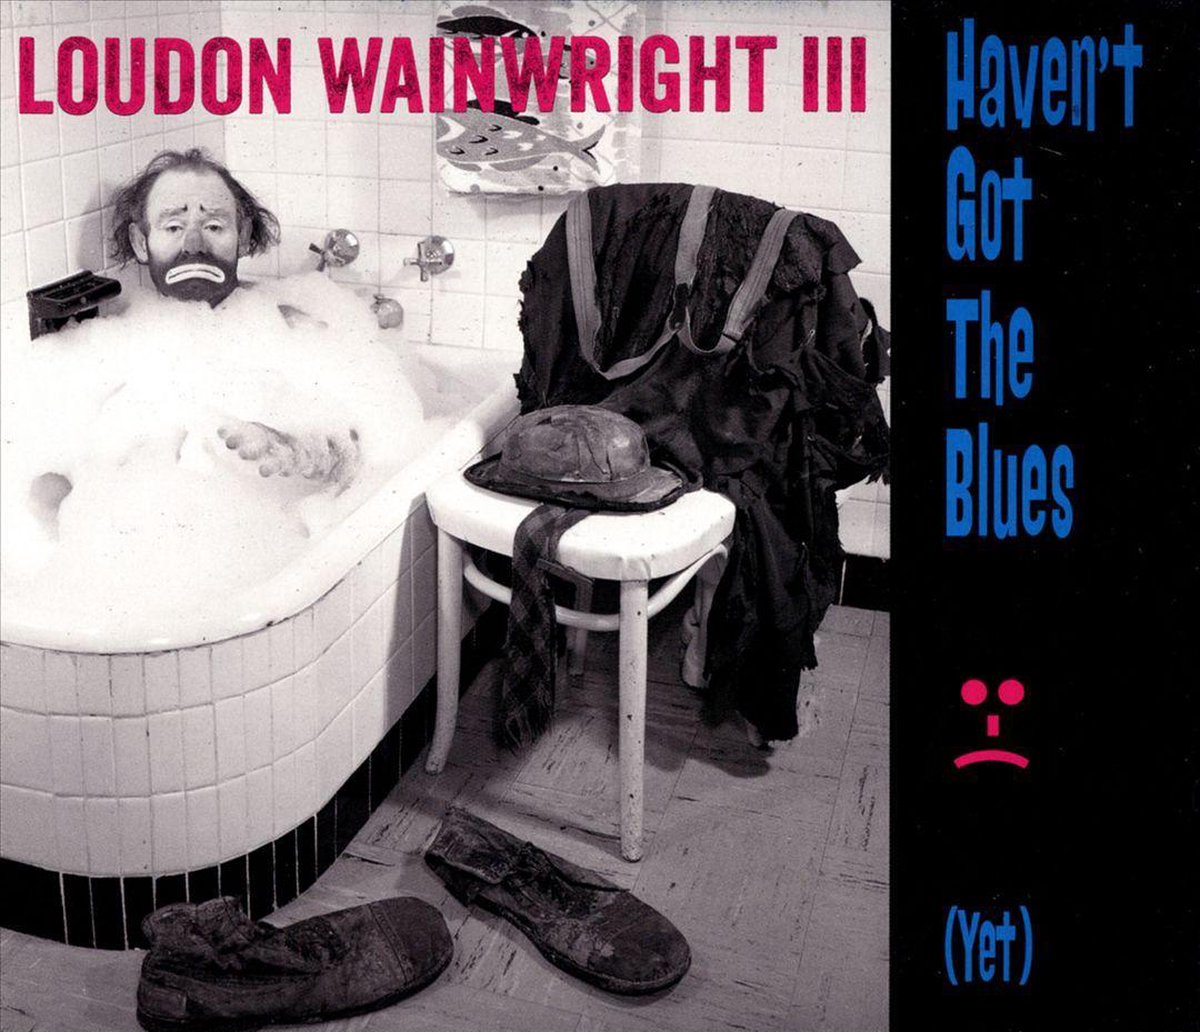 Haven't Got the Blues (Yet) - Loudon Wainwright Iii